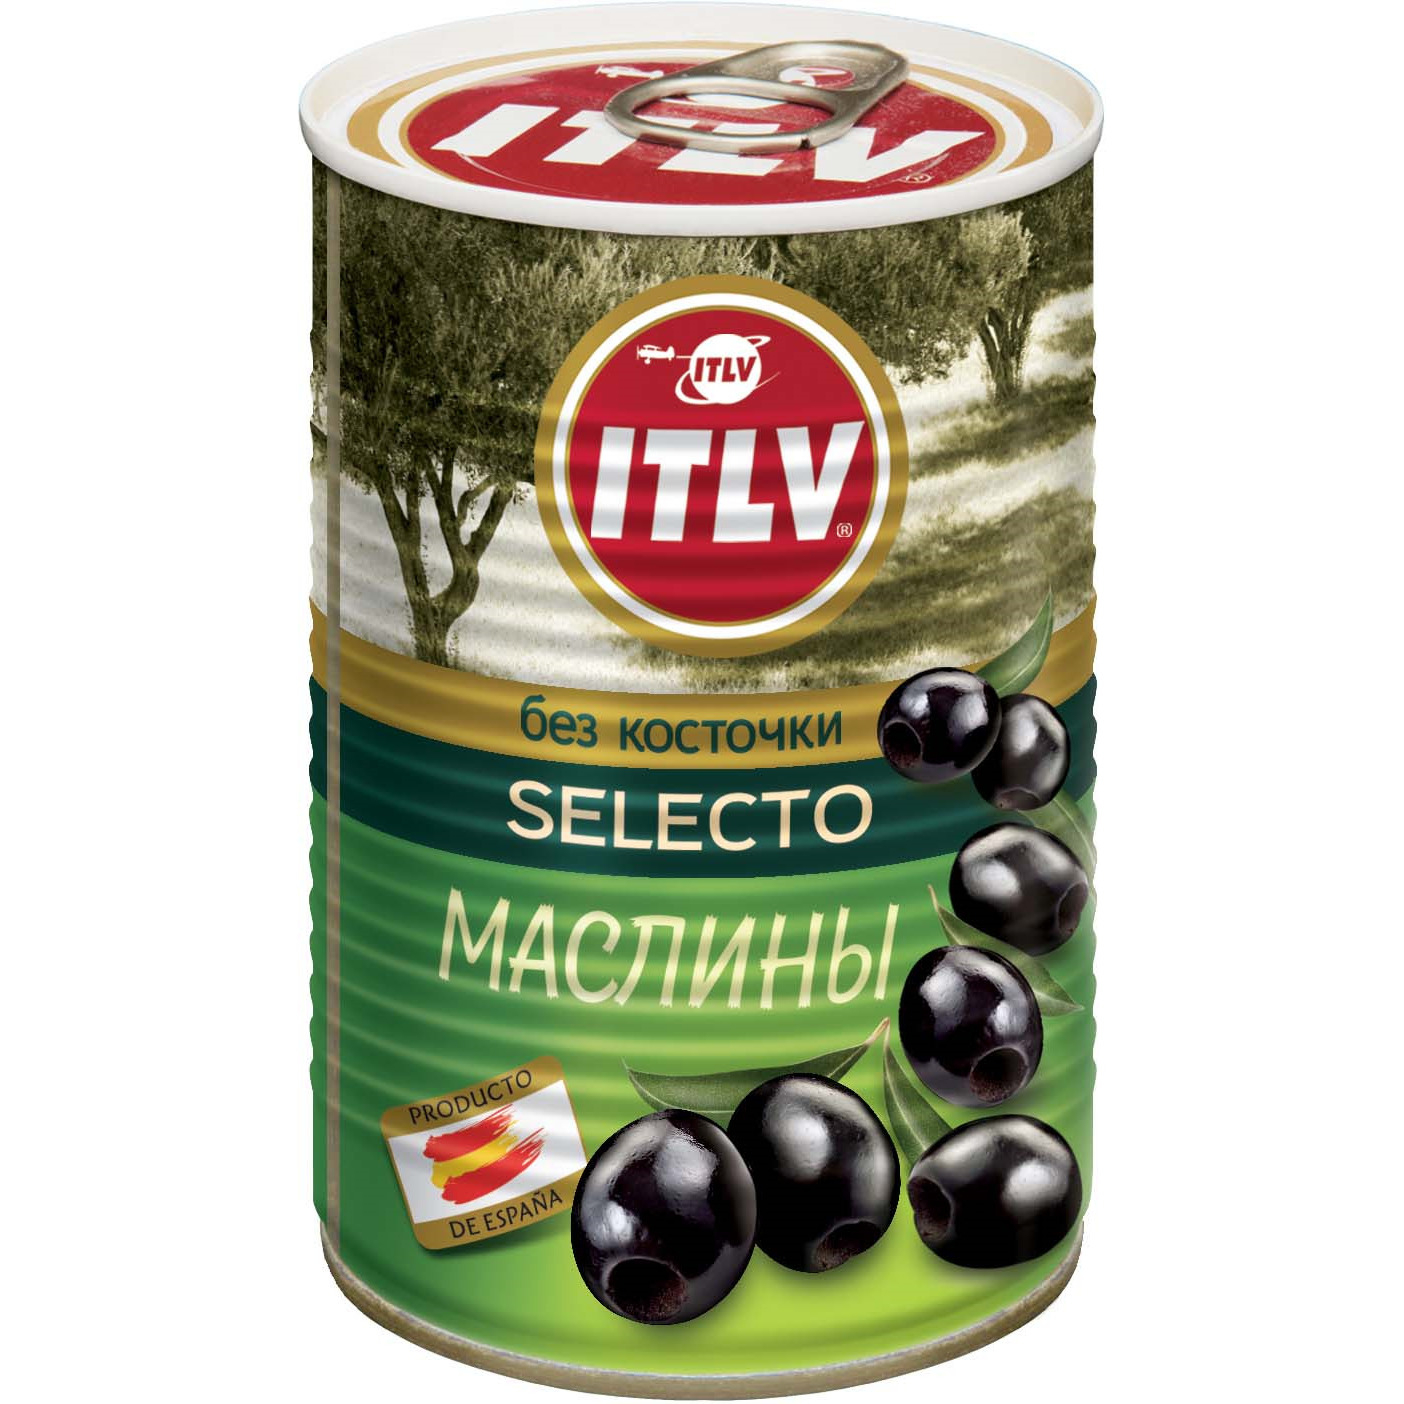 Маслины без косточки ITLV  Selecto, 425 мл маслины itlv с косточкой super 370 мл